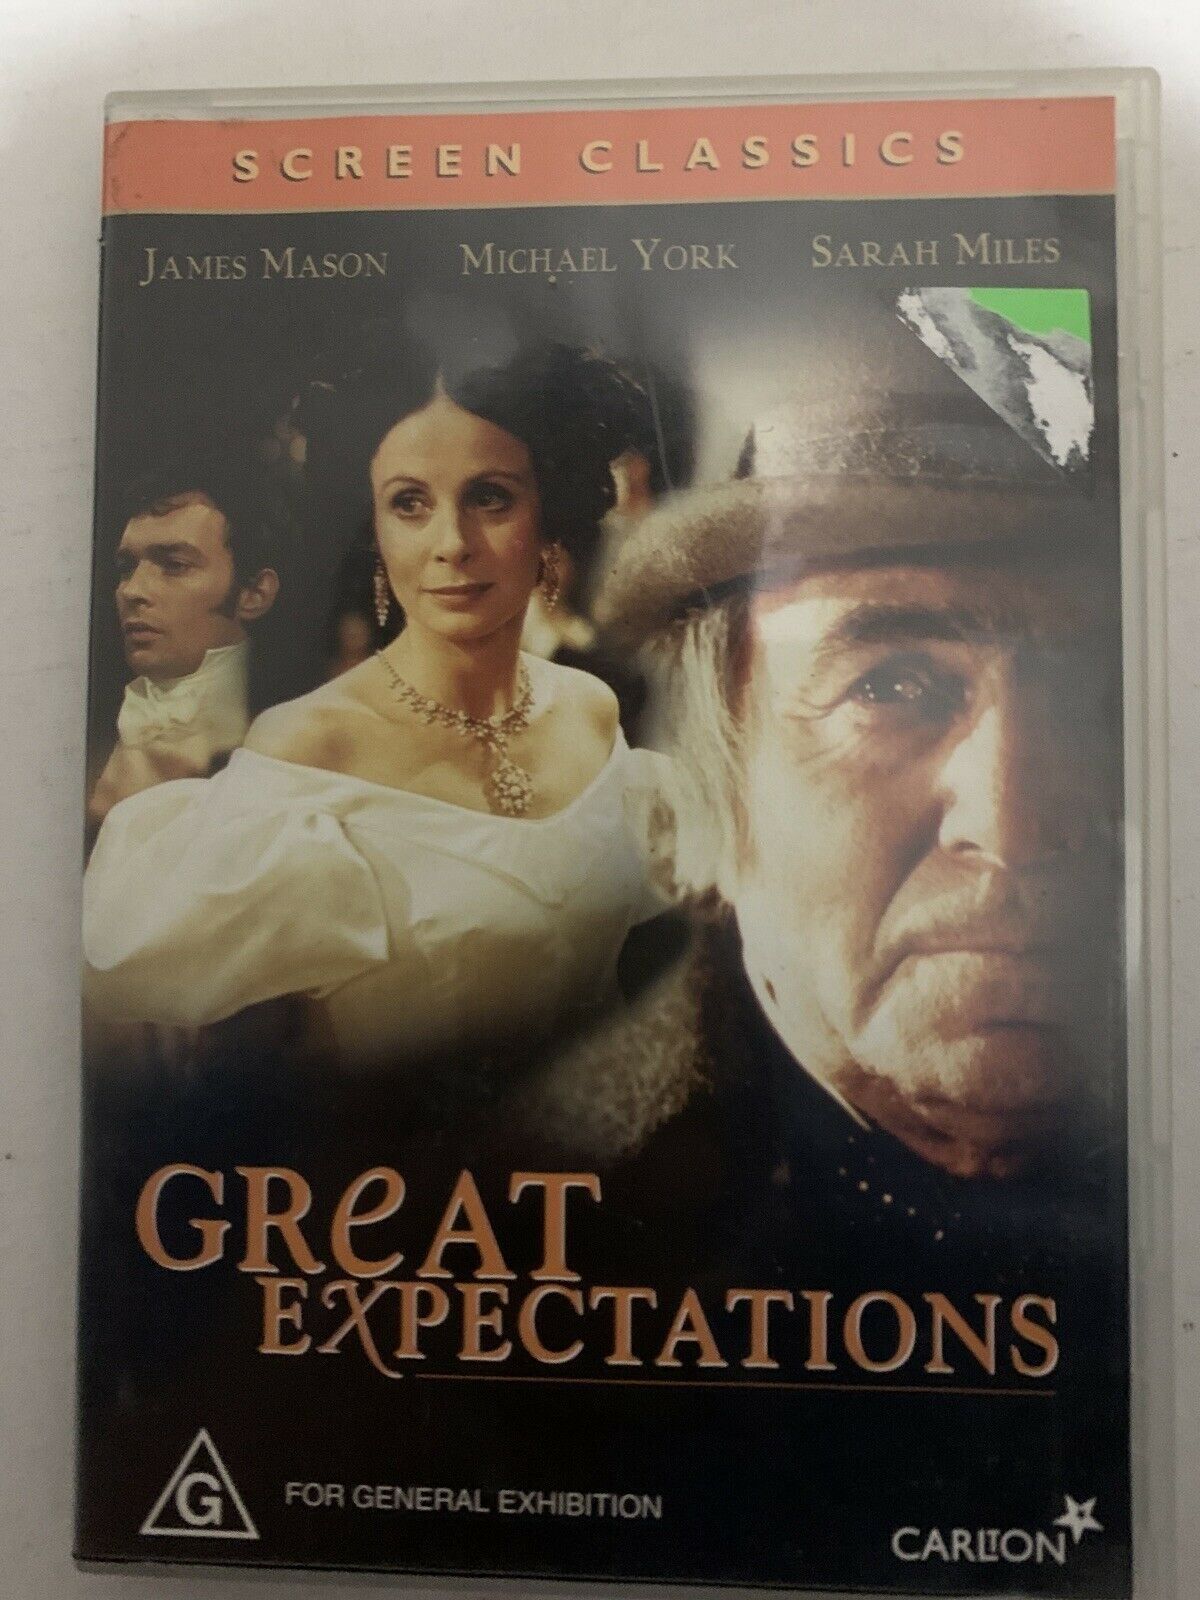 Great Expectations (DVD, 1974) James Mason, Michael York. Region 4